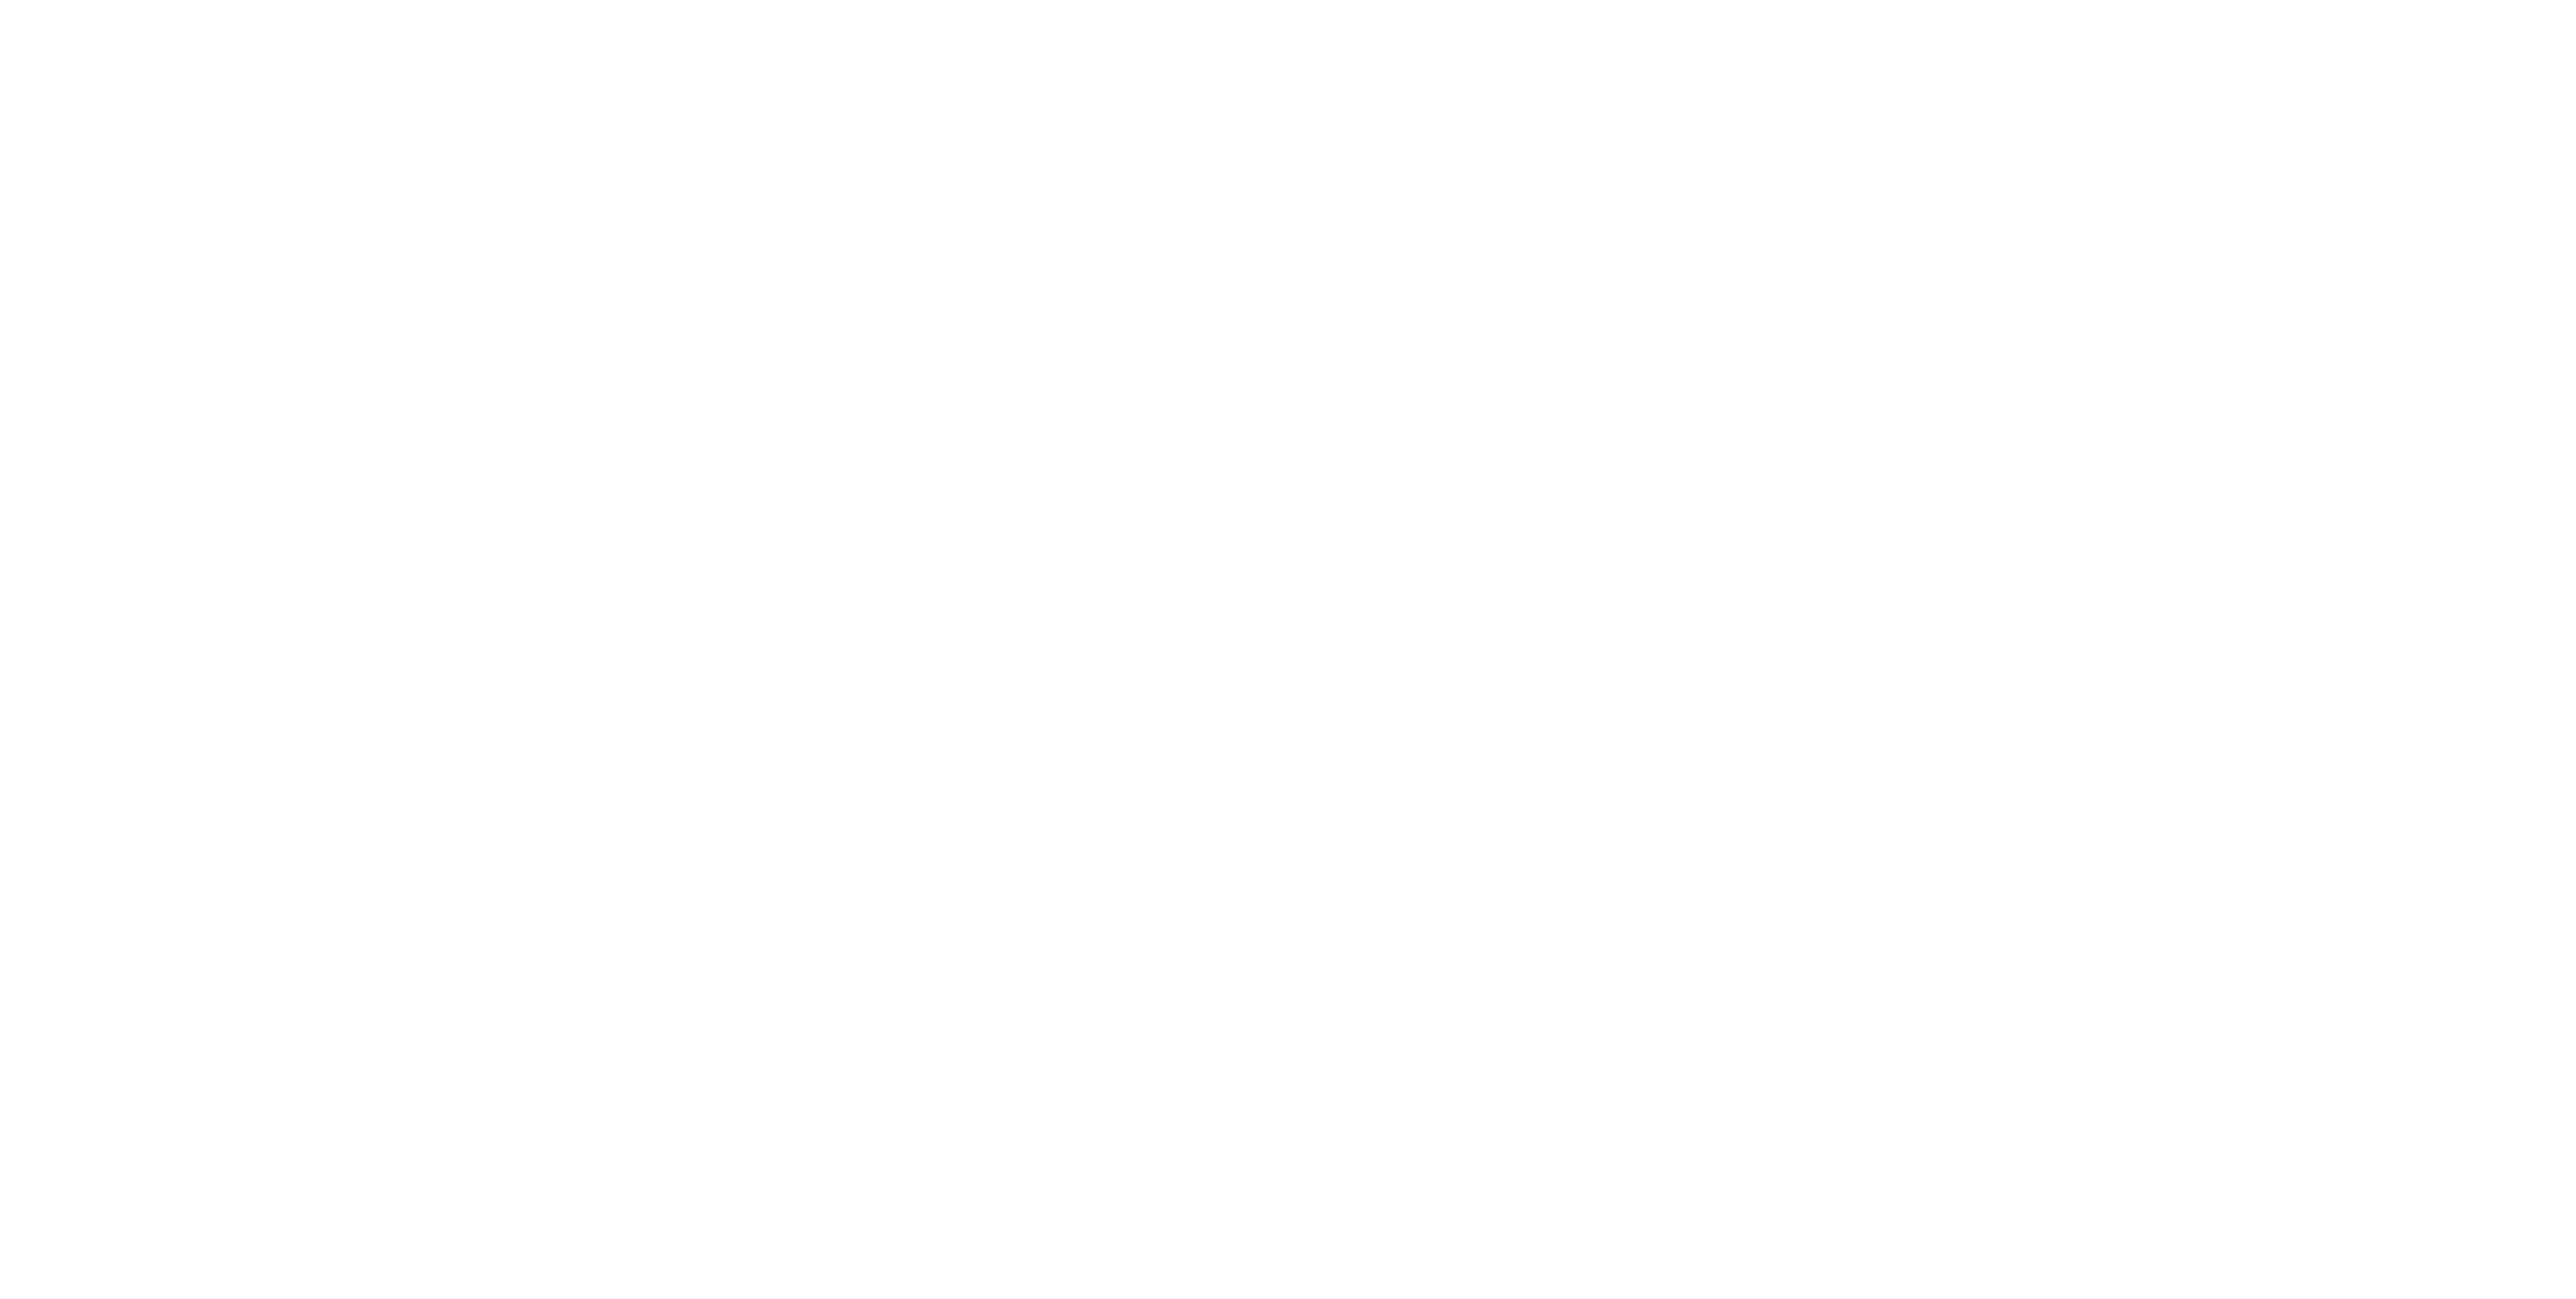 Christmas at Bute Park